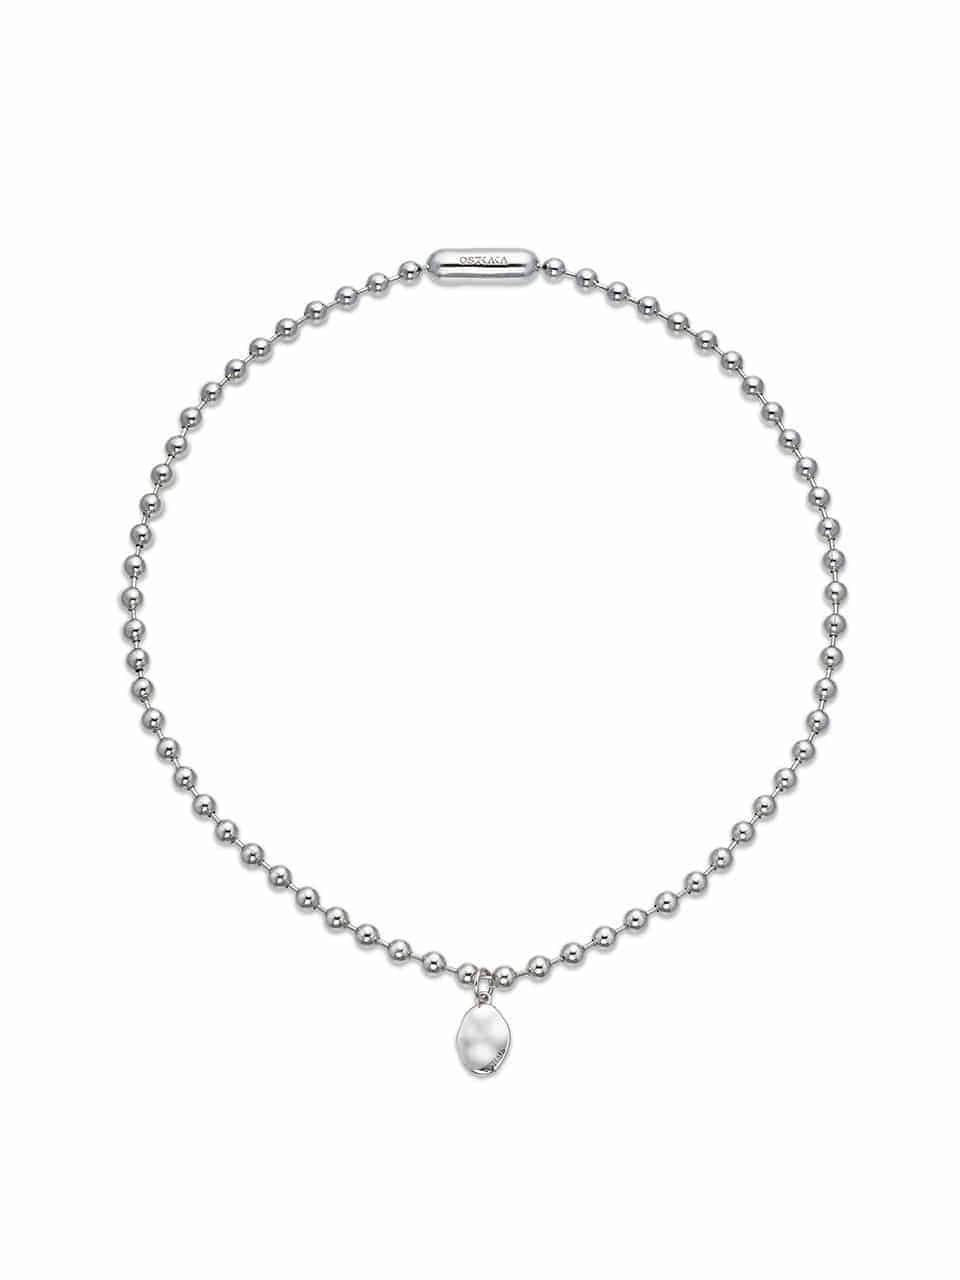 Femina Ball Chain Necklace Silver